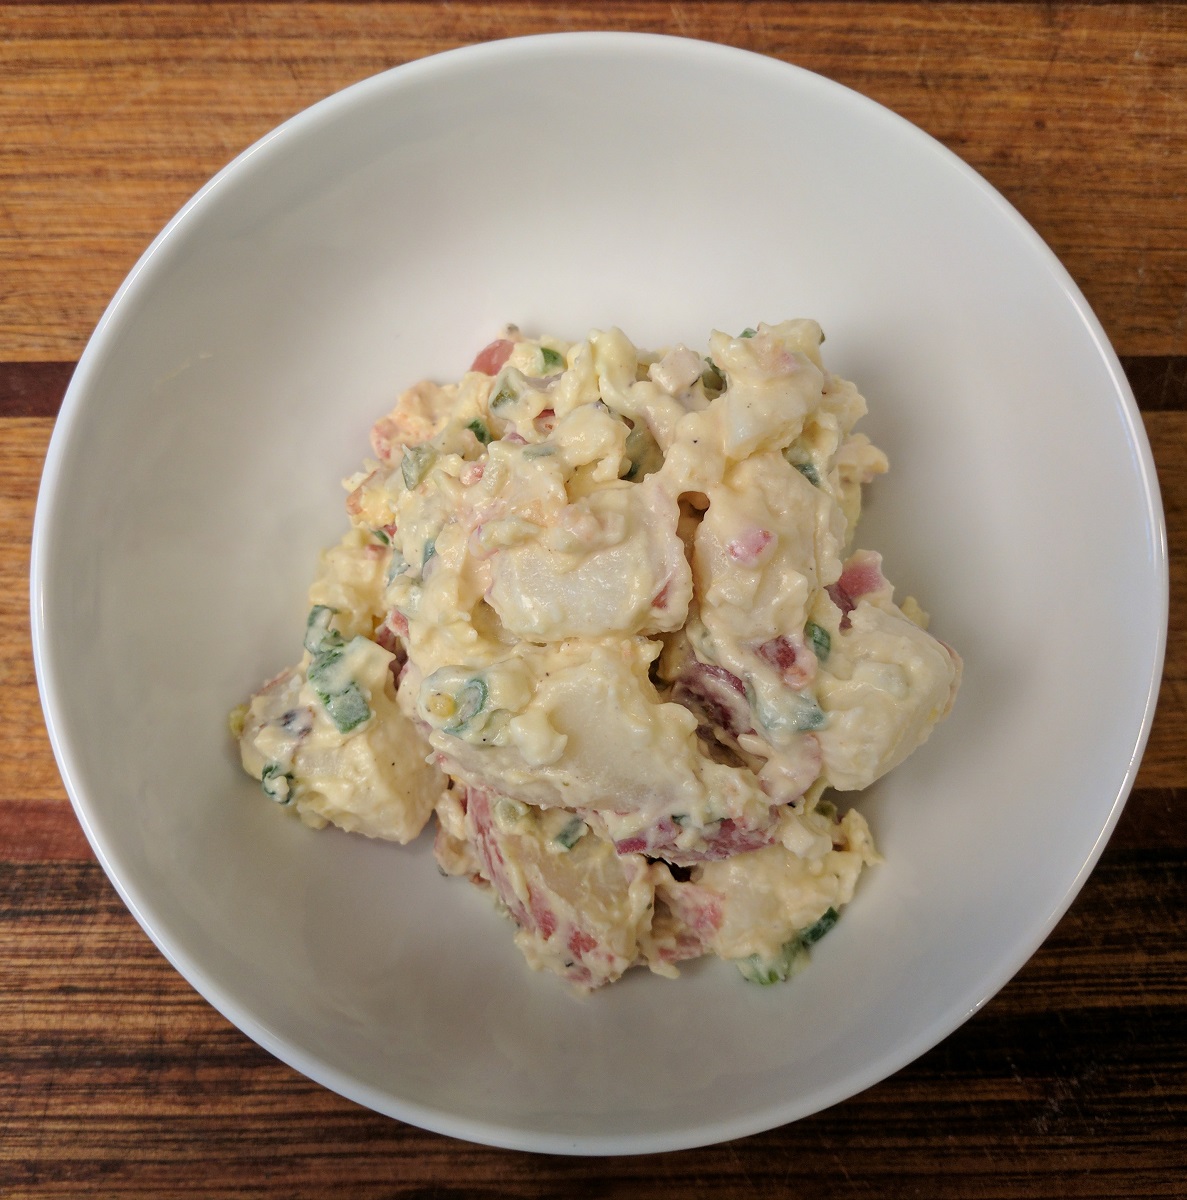 Creamy Potato Salad with Bacon